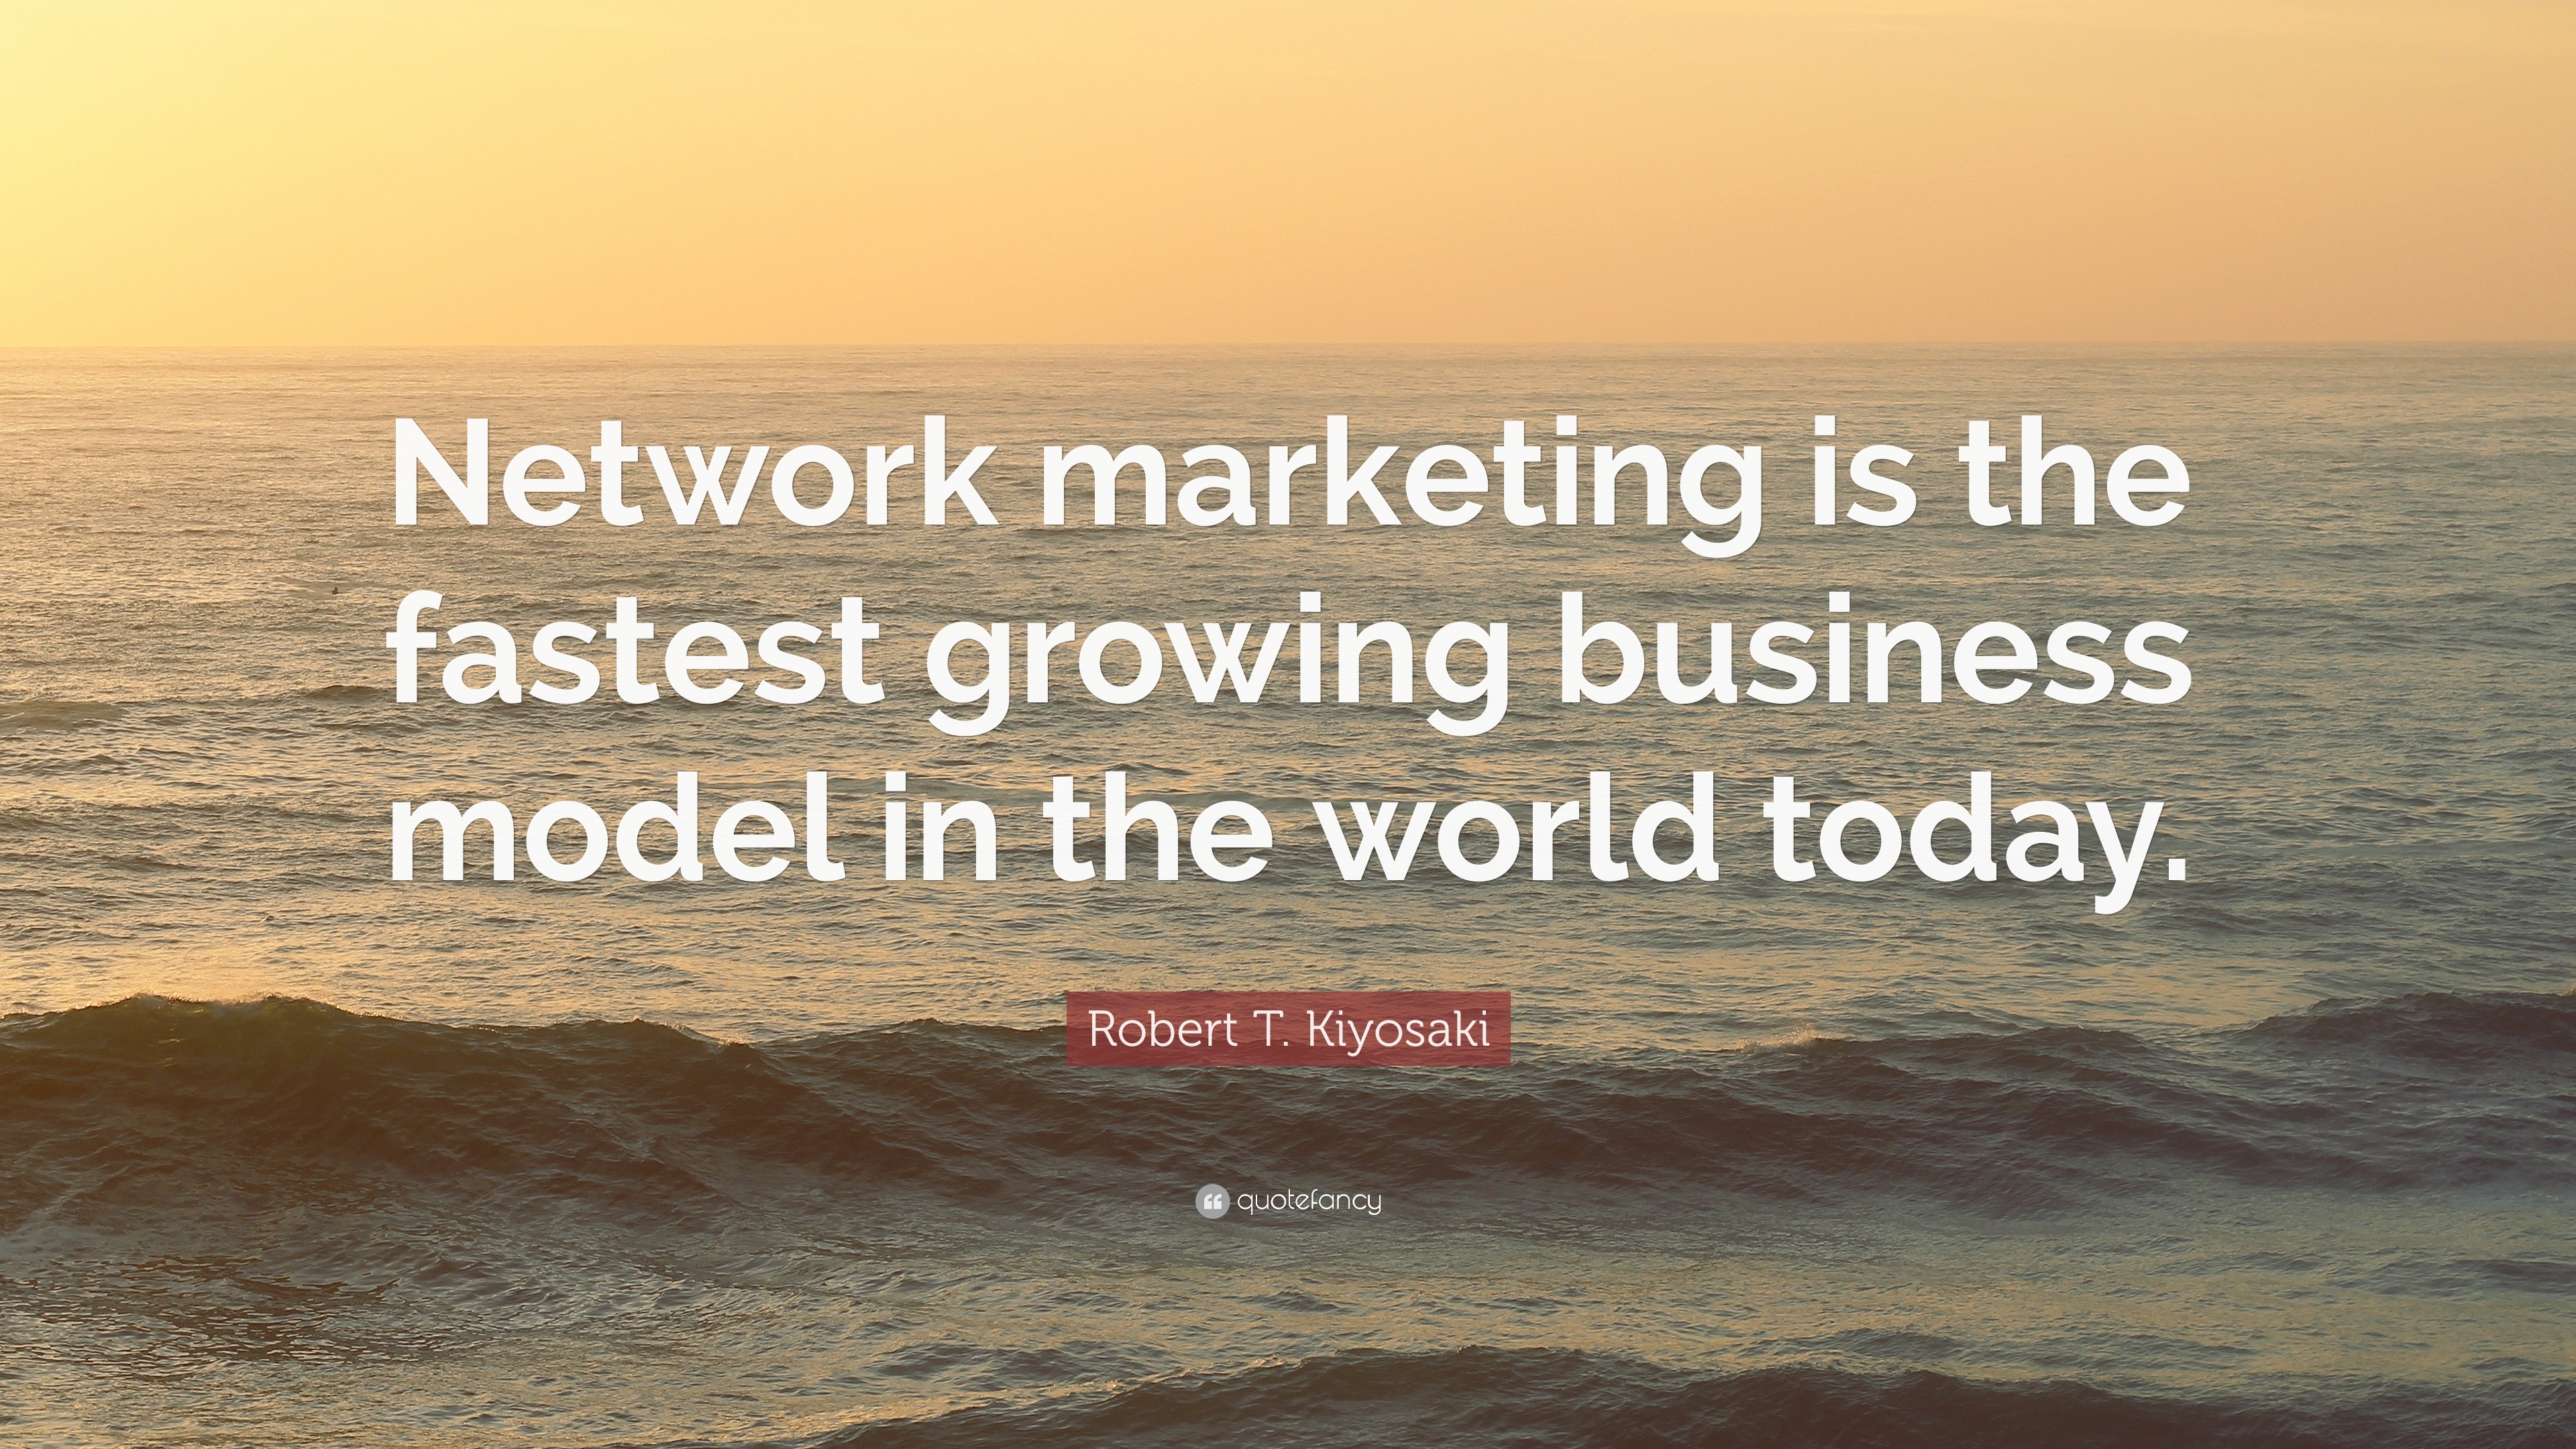 1709036 Robert T Kiyosaki Quote Network marketing is the fastest growing